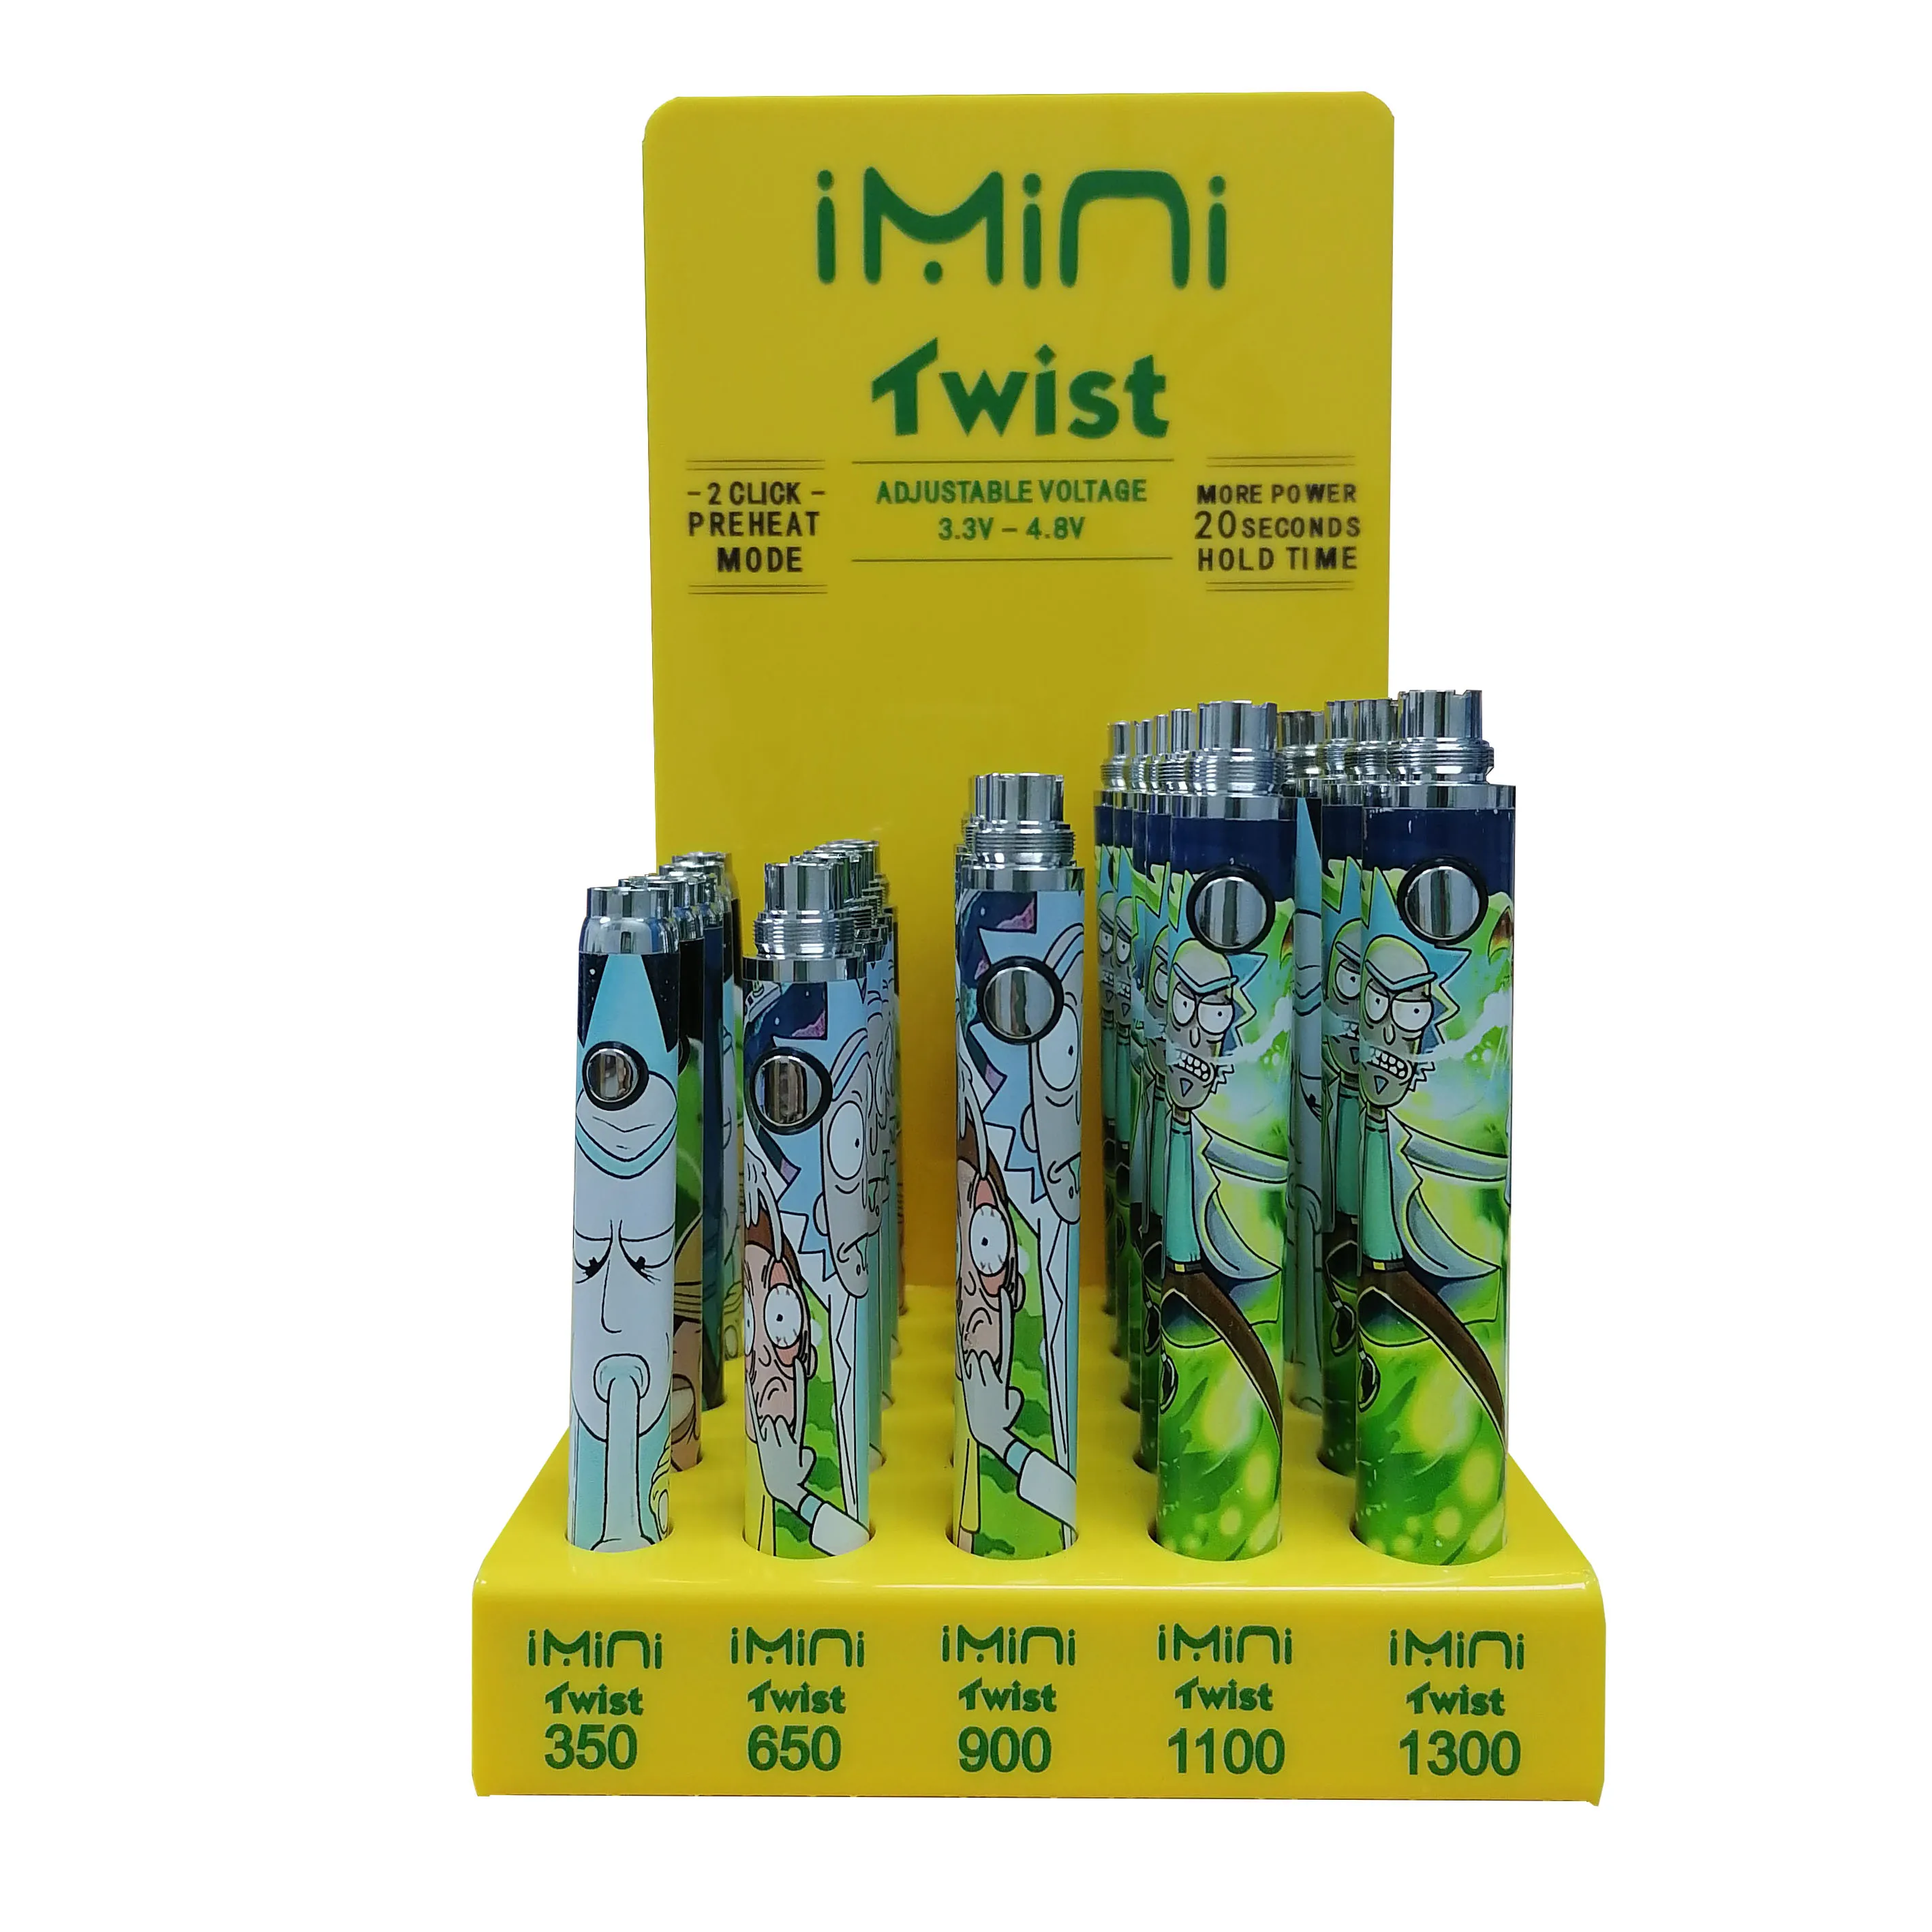 

2020 Newest Imini Twist Slim Battery Kit 25PCS Preheat CBD Variable Voltage 510 Twist Battery with Display package